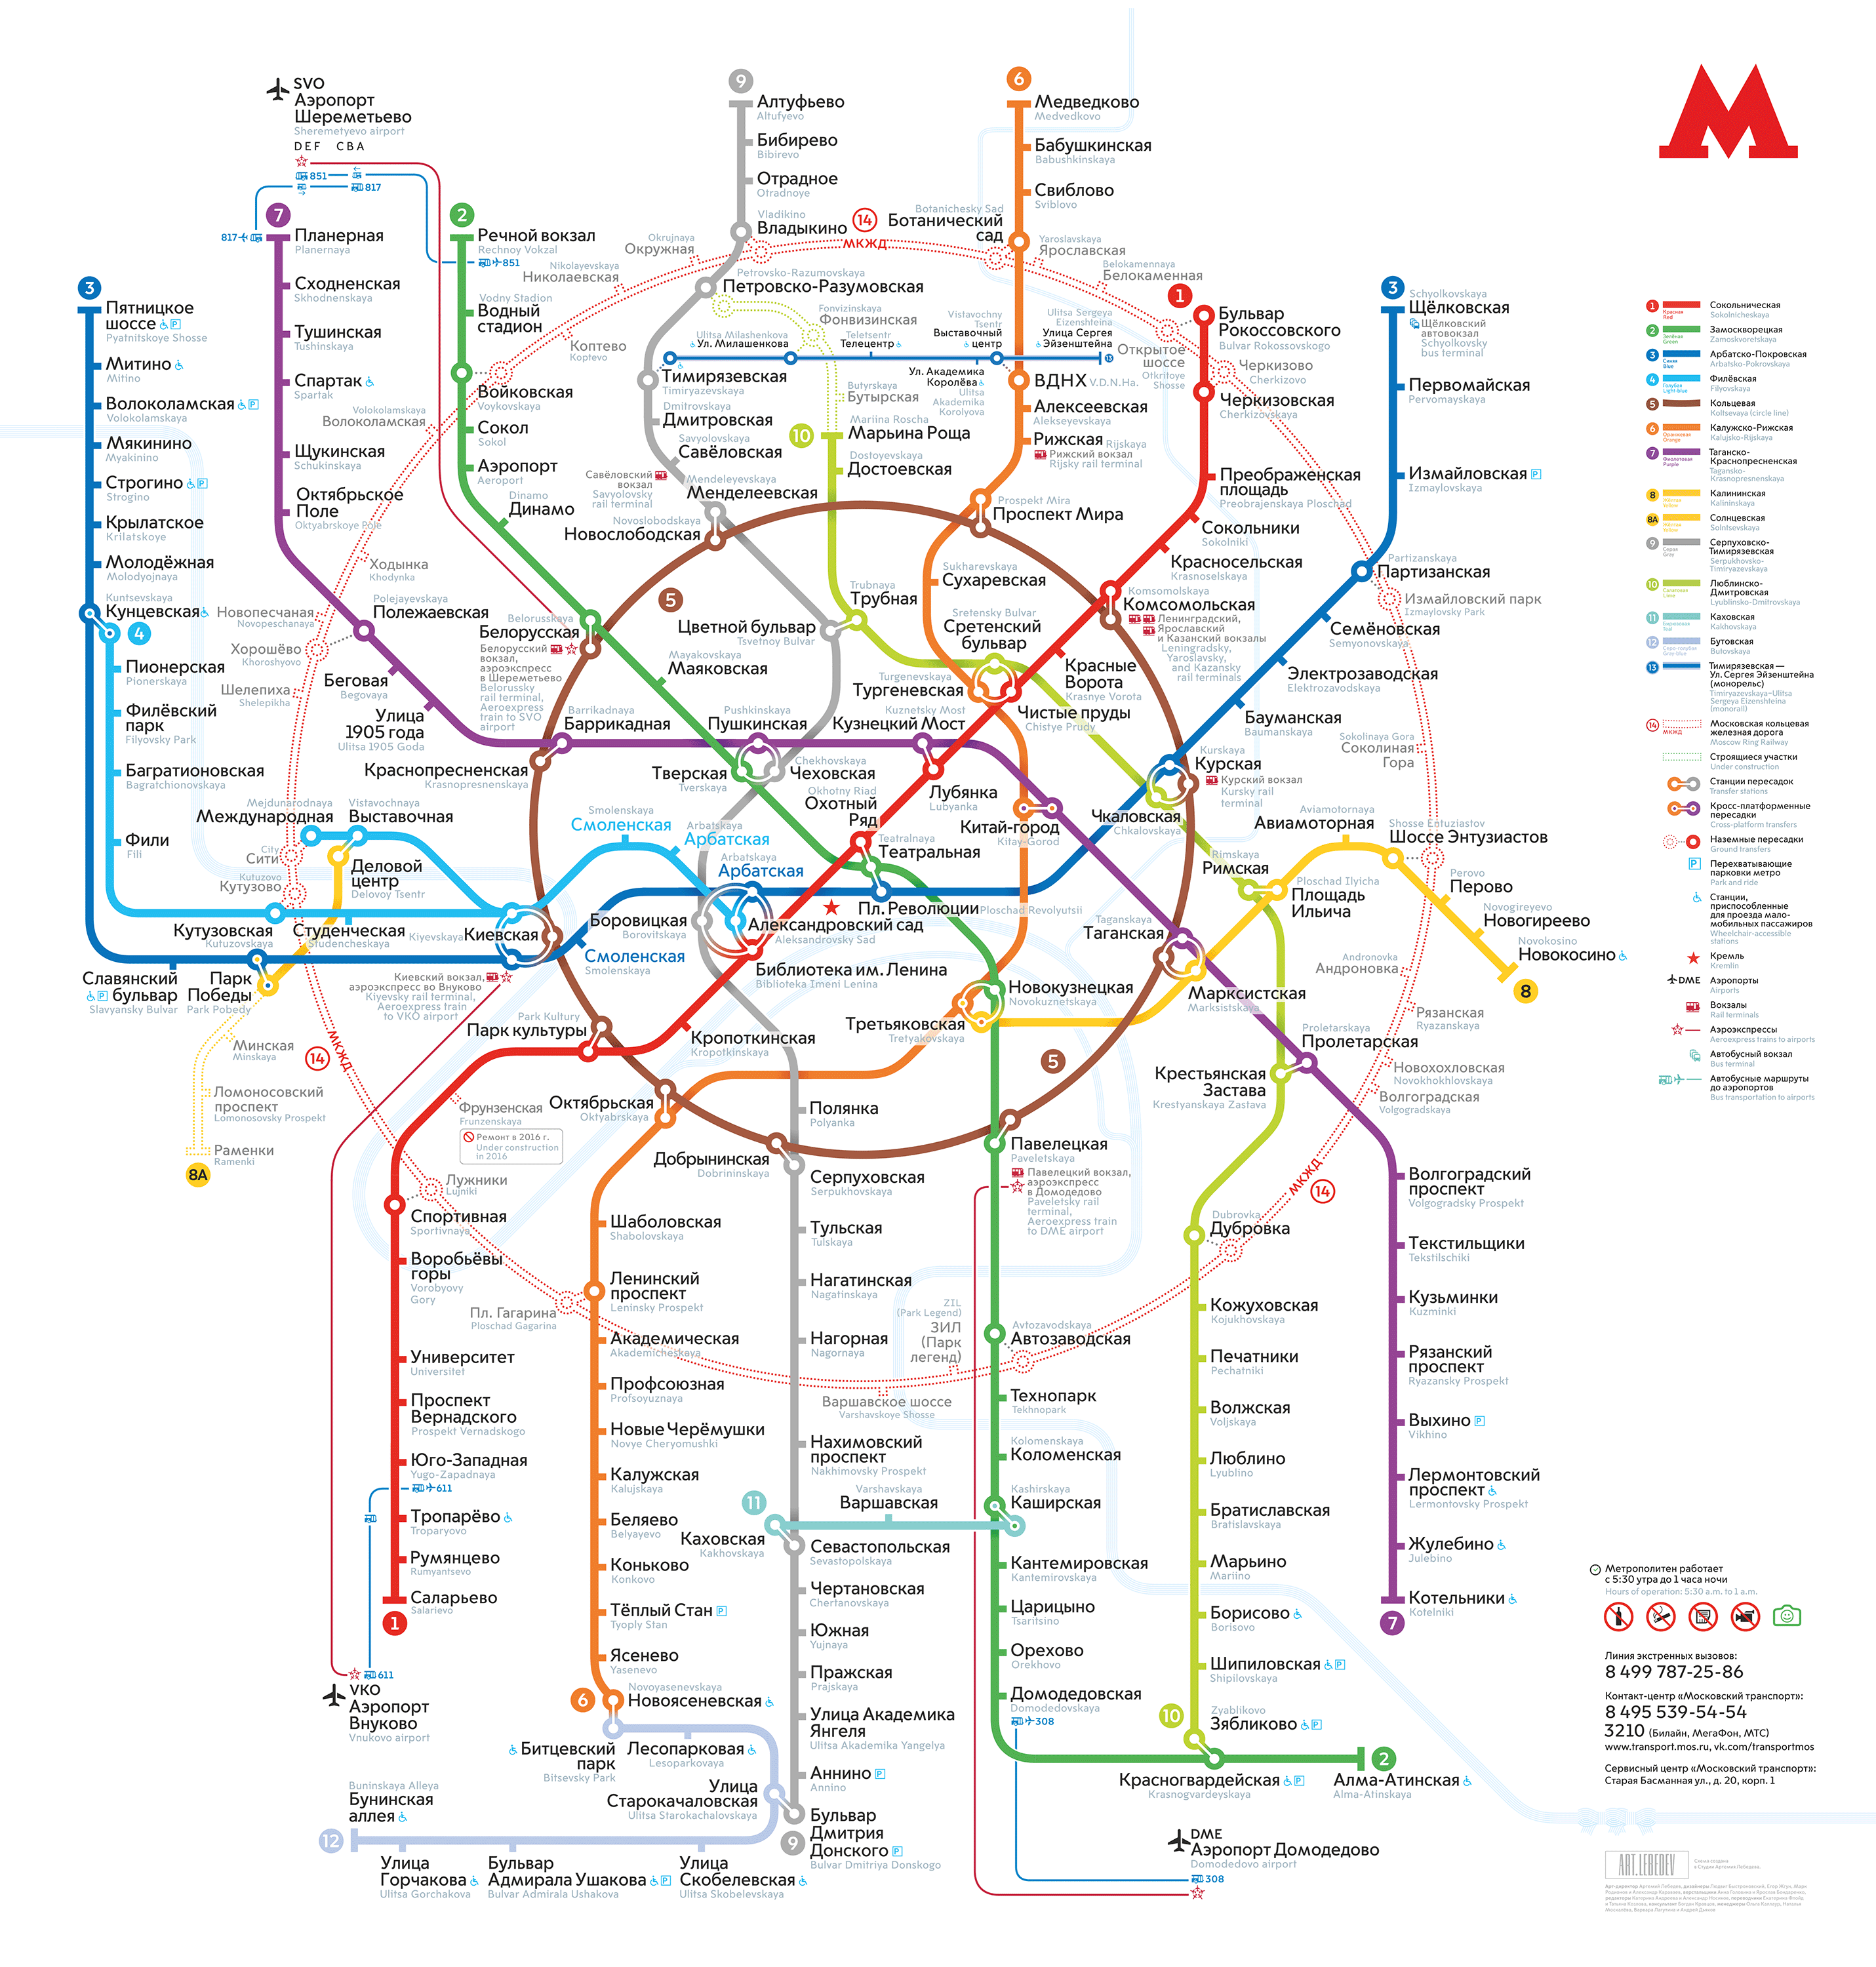 Moszkva — Metro — Maps